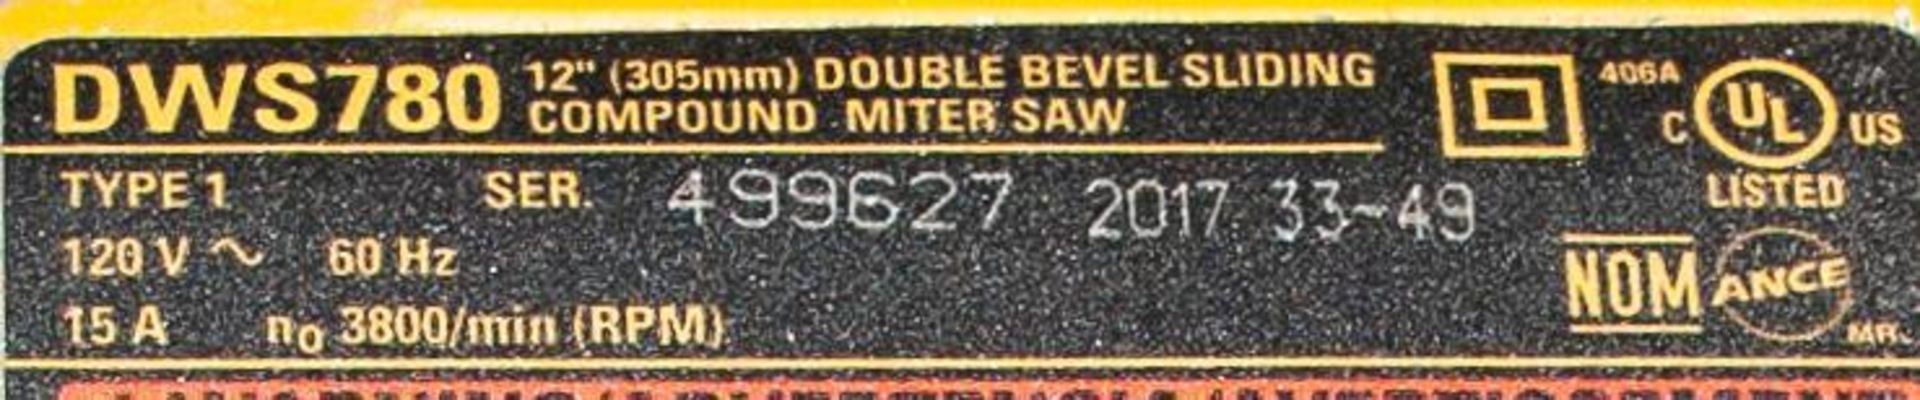 DeWalt Model DWS780 Double Bevel Sliding Compound Miter Saw s/n 499627 w/ 18' (est.) Wood Top Metal - Image 3 of 3